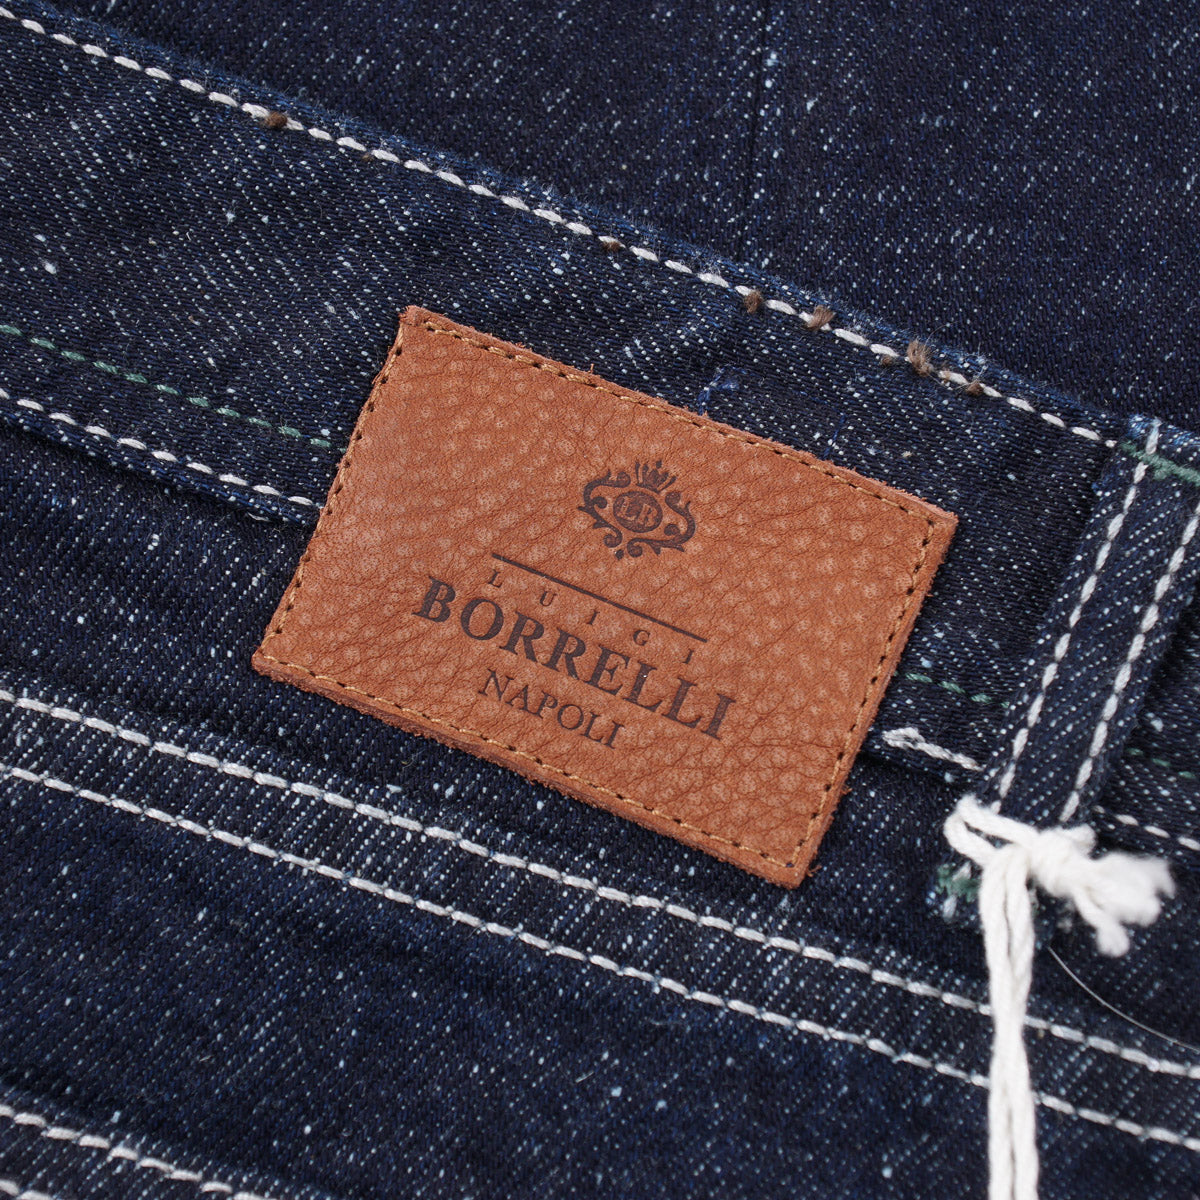 Luigi Borrelli Flecked Denim Jeans - Top Shelf Apparel